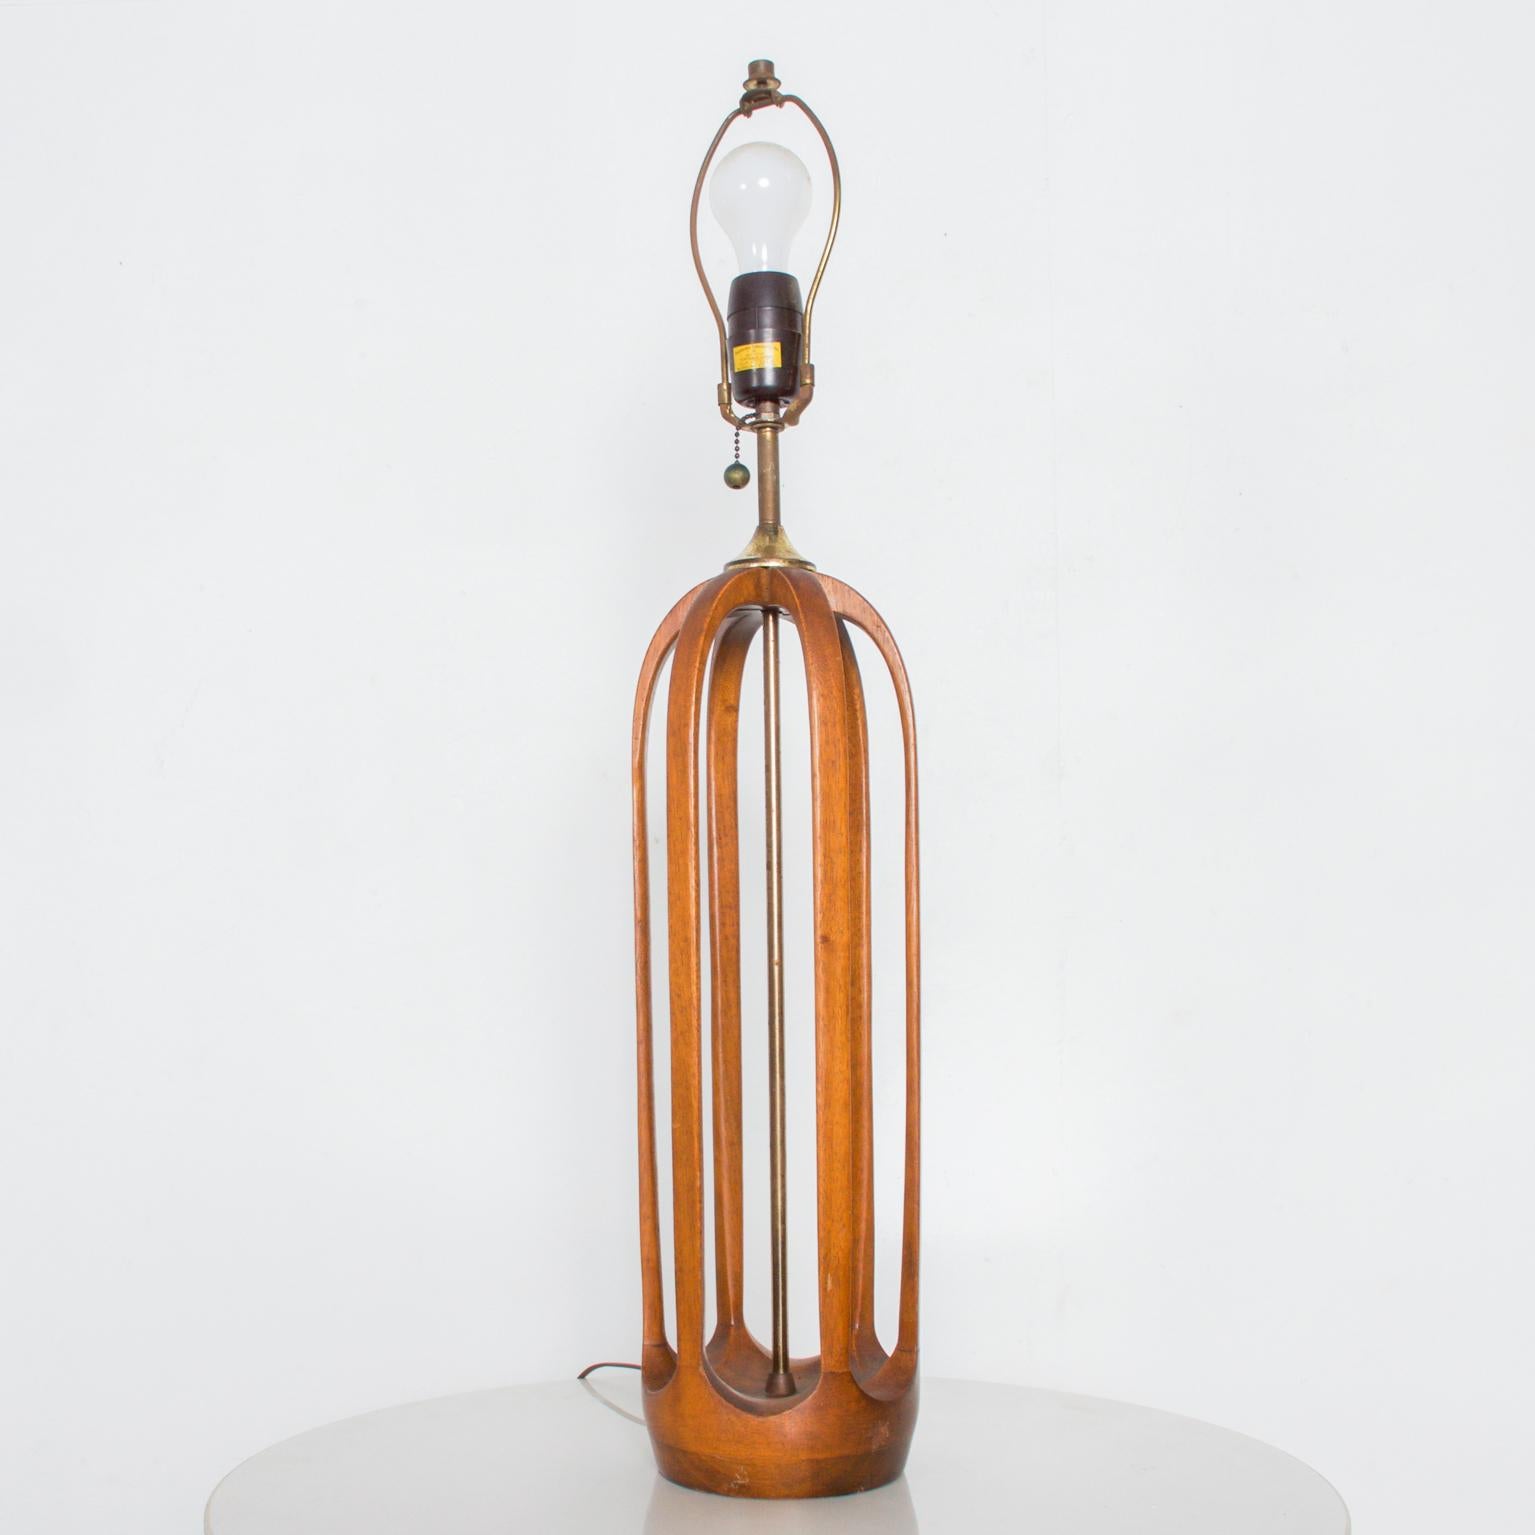 Modeline Sculptural walnut wood lamp classic Mid-Century Modern, USA, circa 1960s
Dimensions: 26 1/4